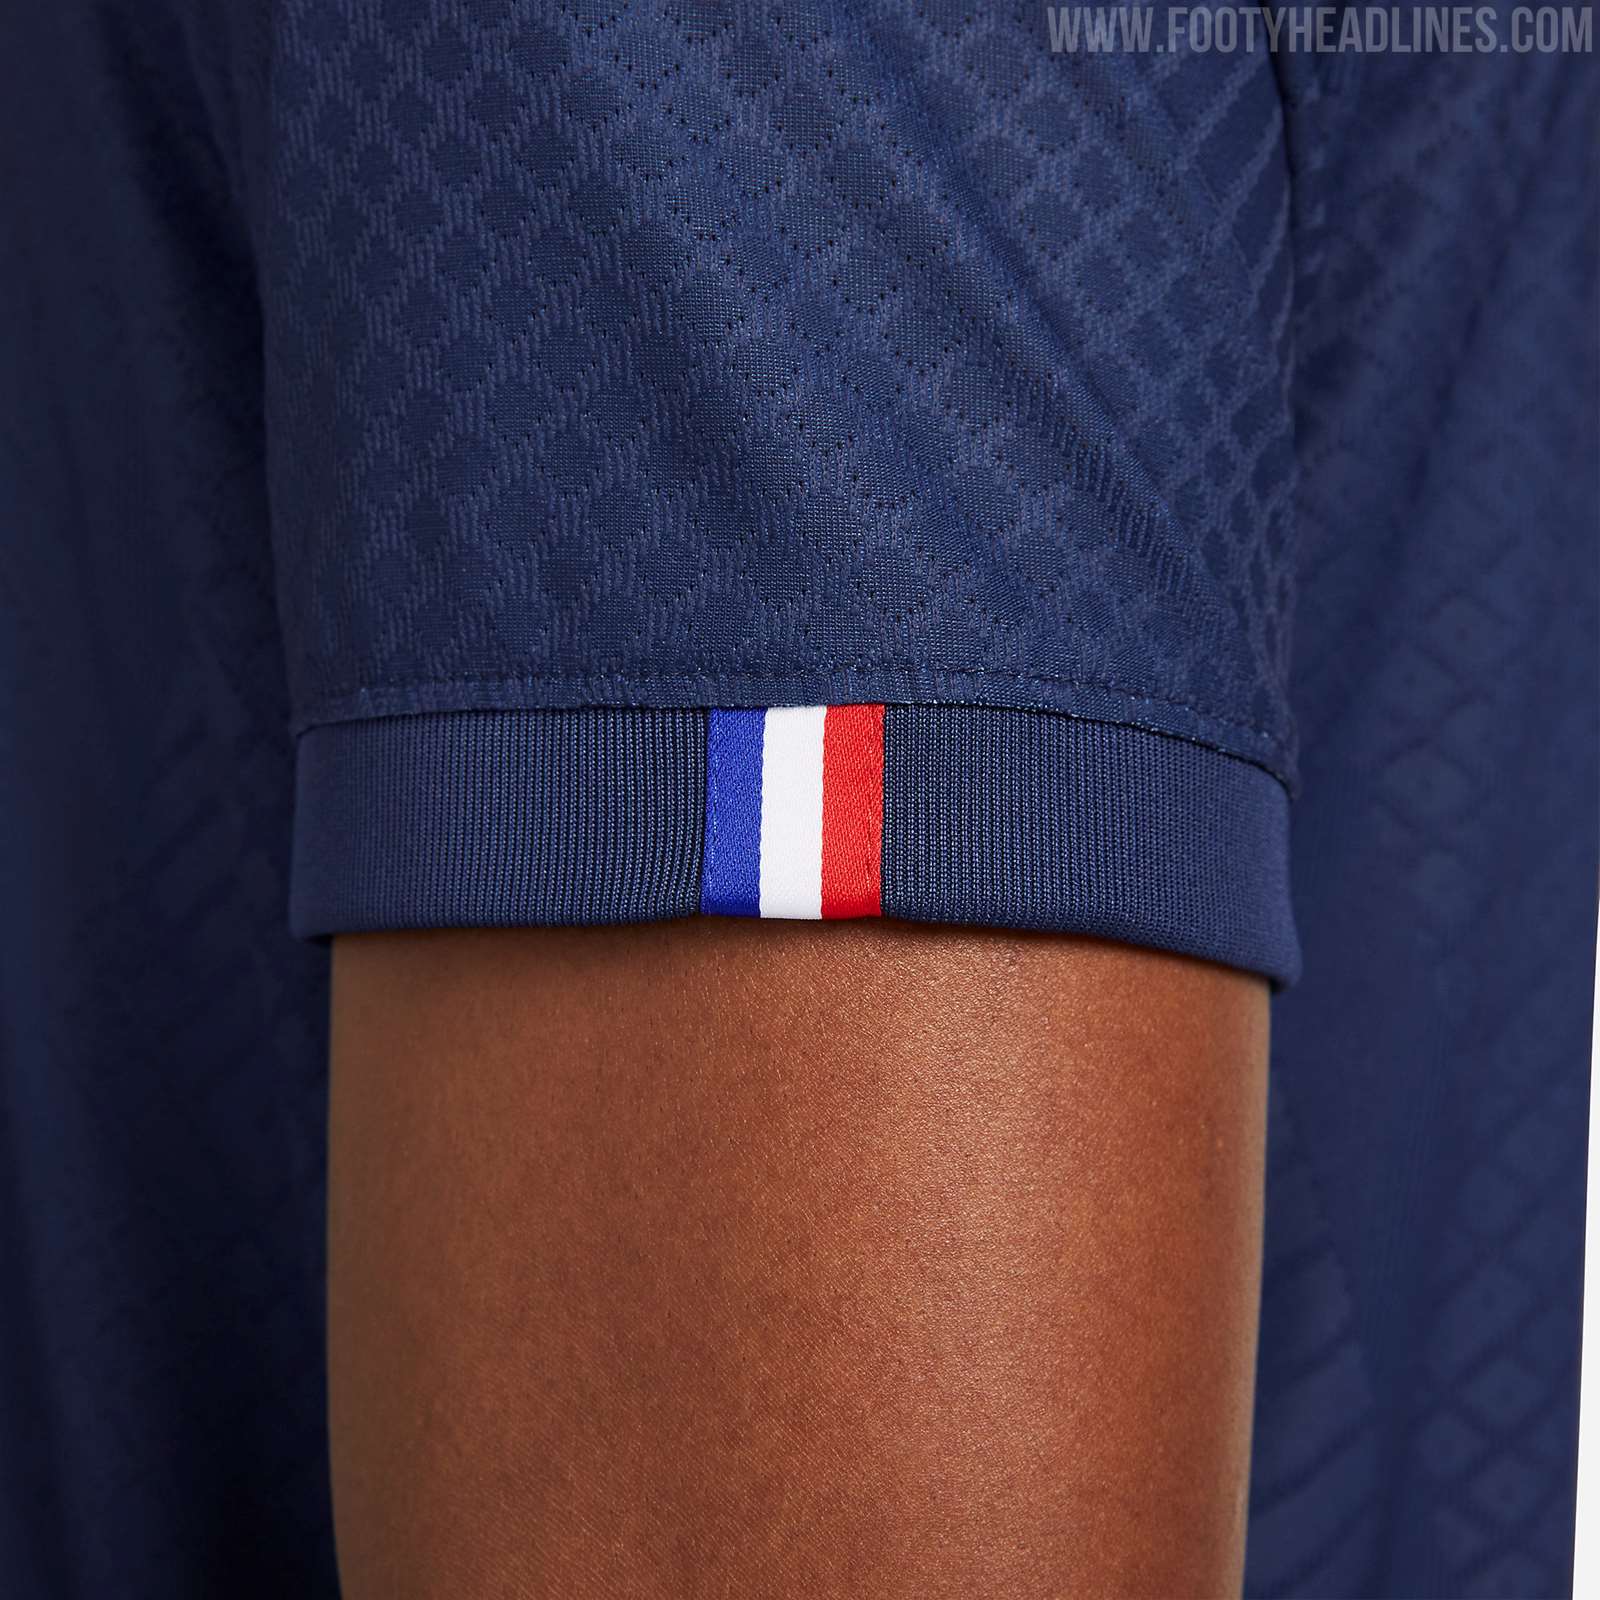 Paris Saint-Germain 21-22 'Paname' Collection Leaked - Louis Vuitton  Inspired? - Footy Headlines